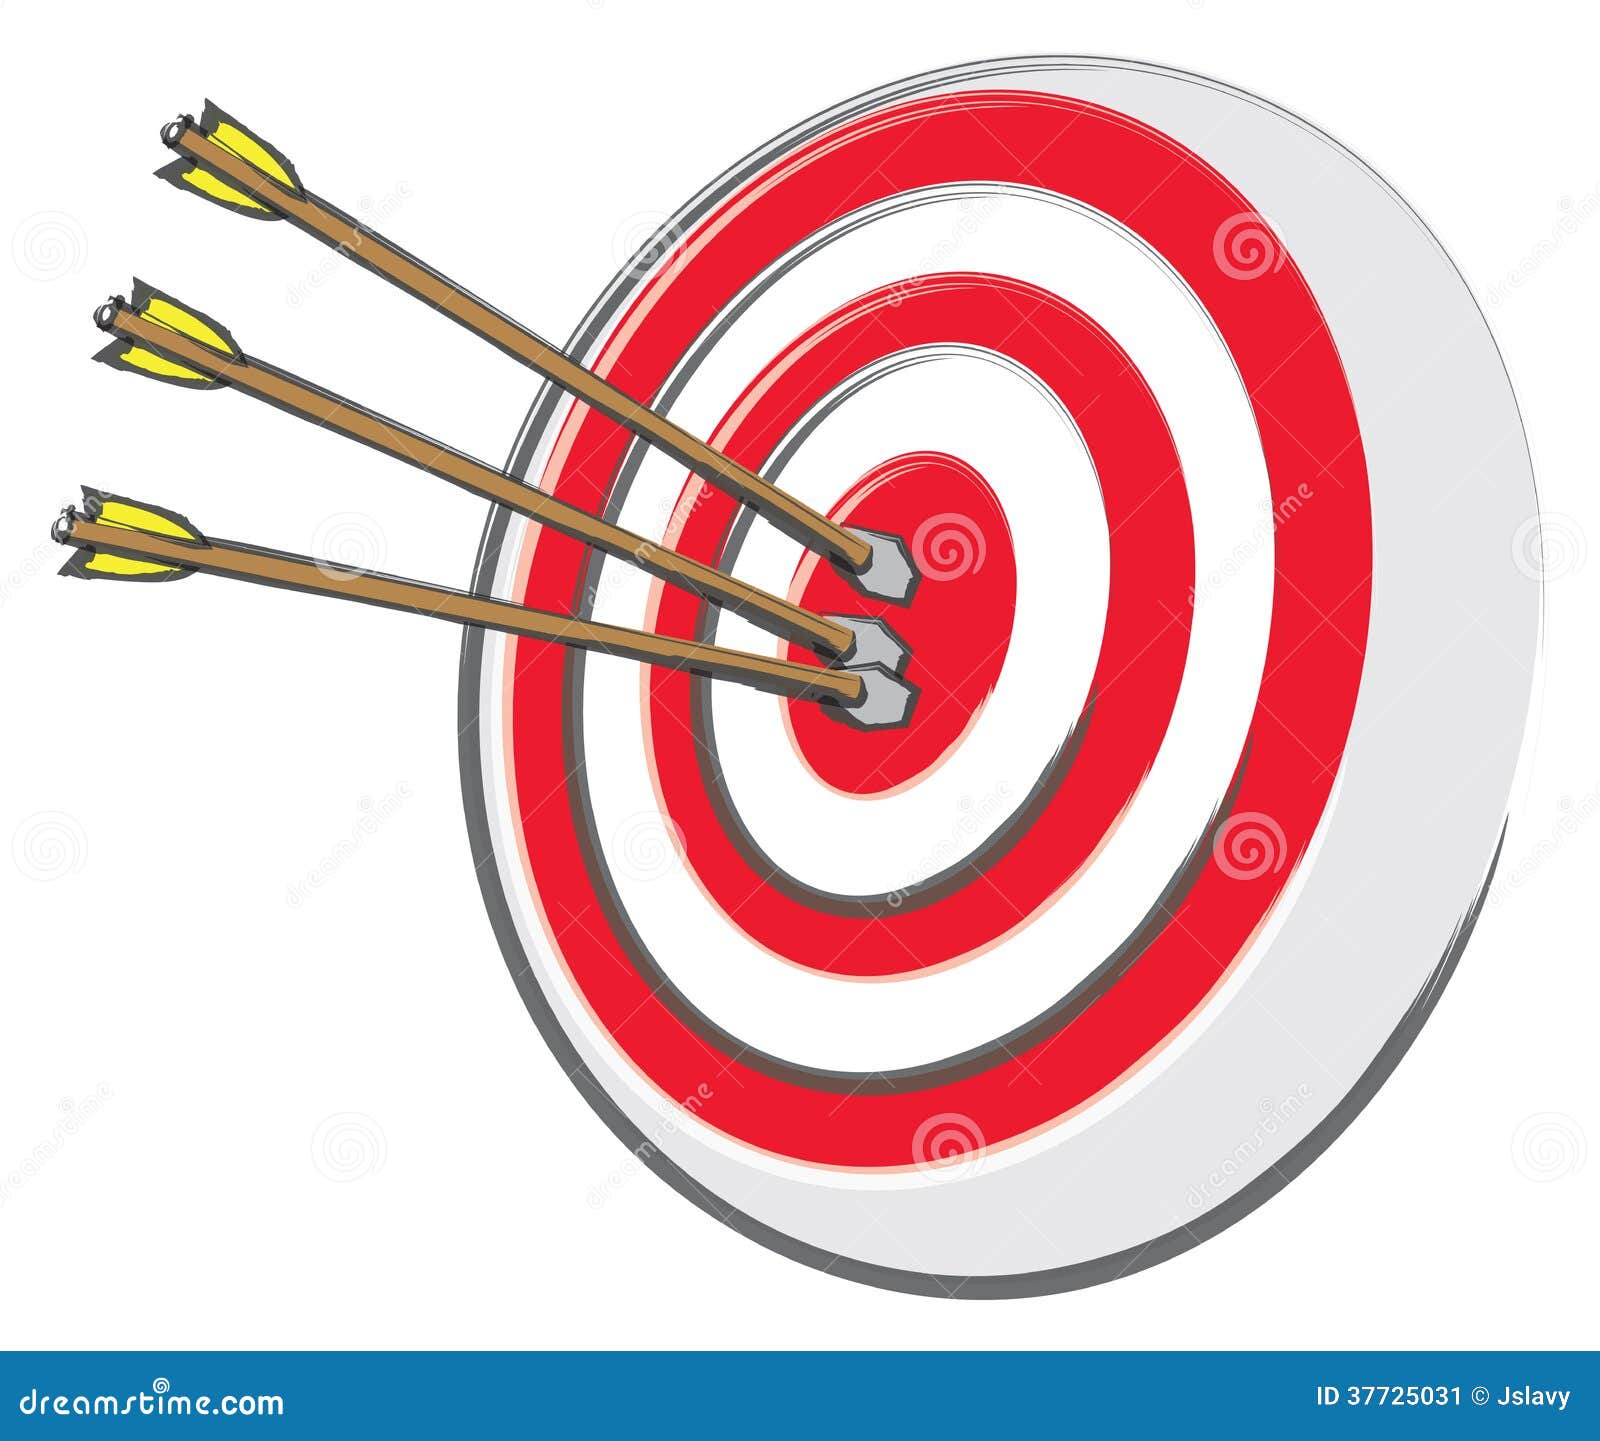 An archery target with three arrows at the bullseye.